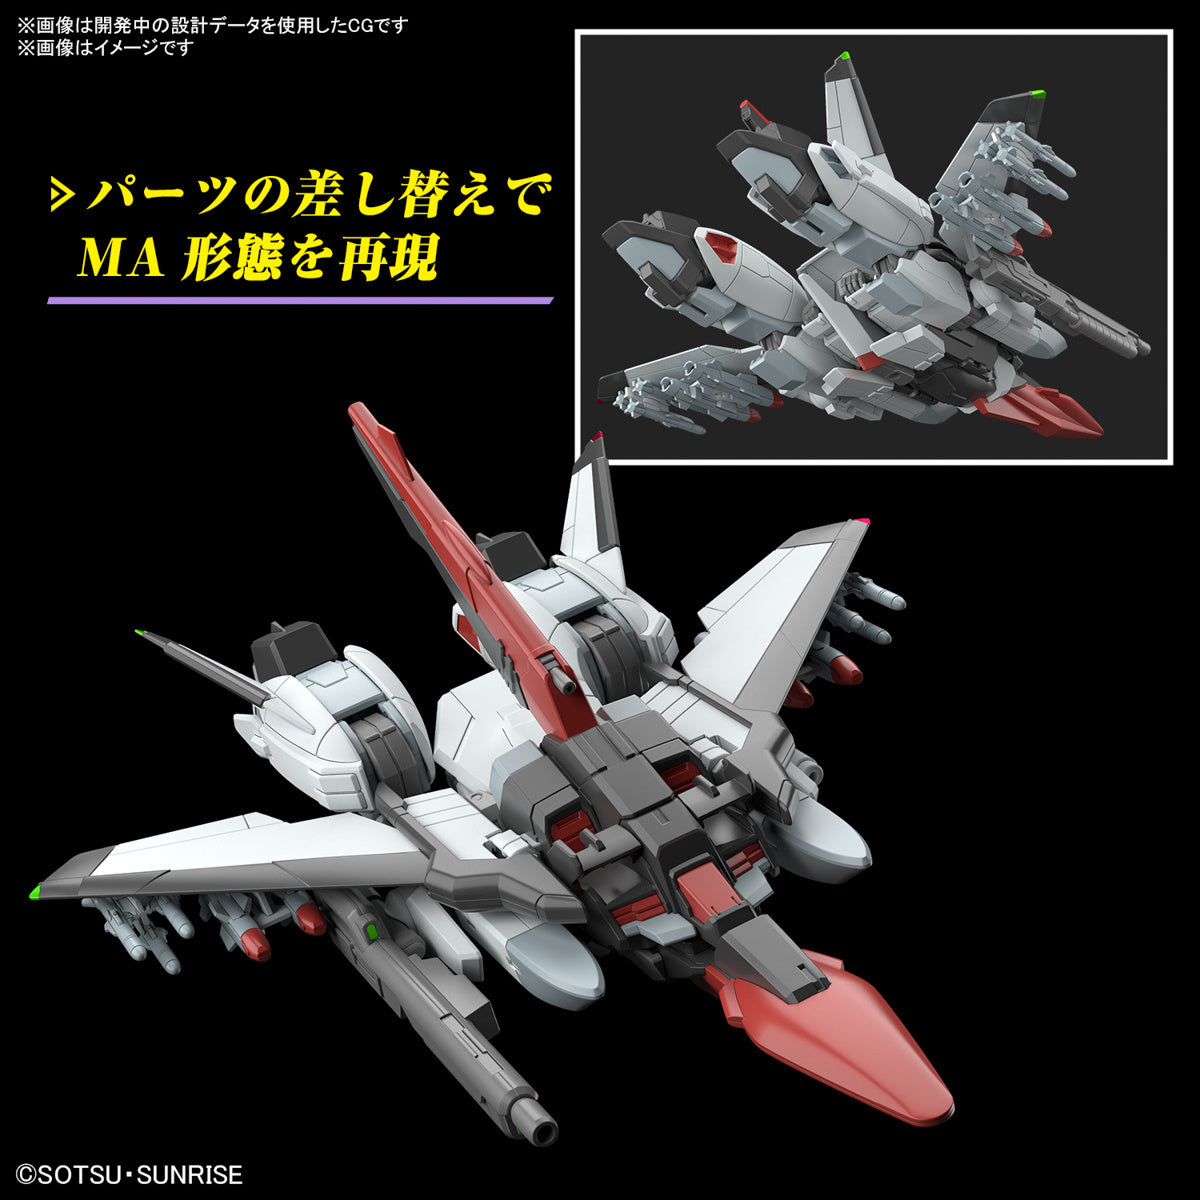 HG 1/144 Murasame (Mobile Suit Gundam SEED Freedom)